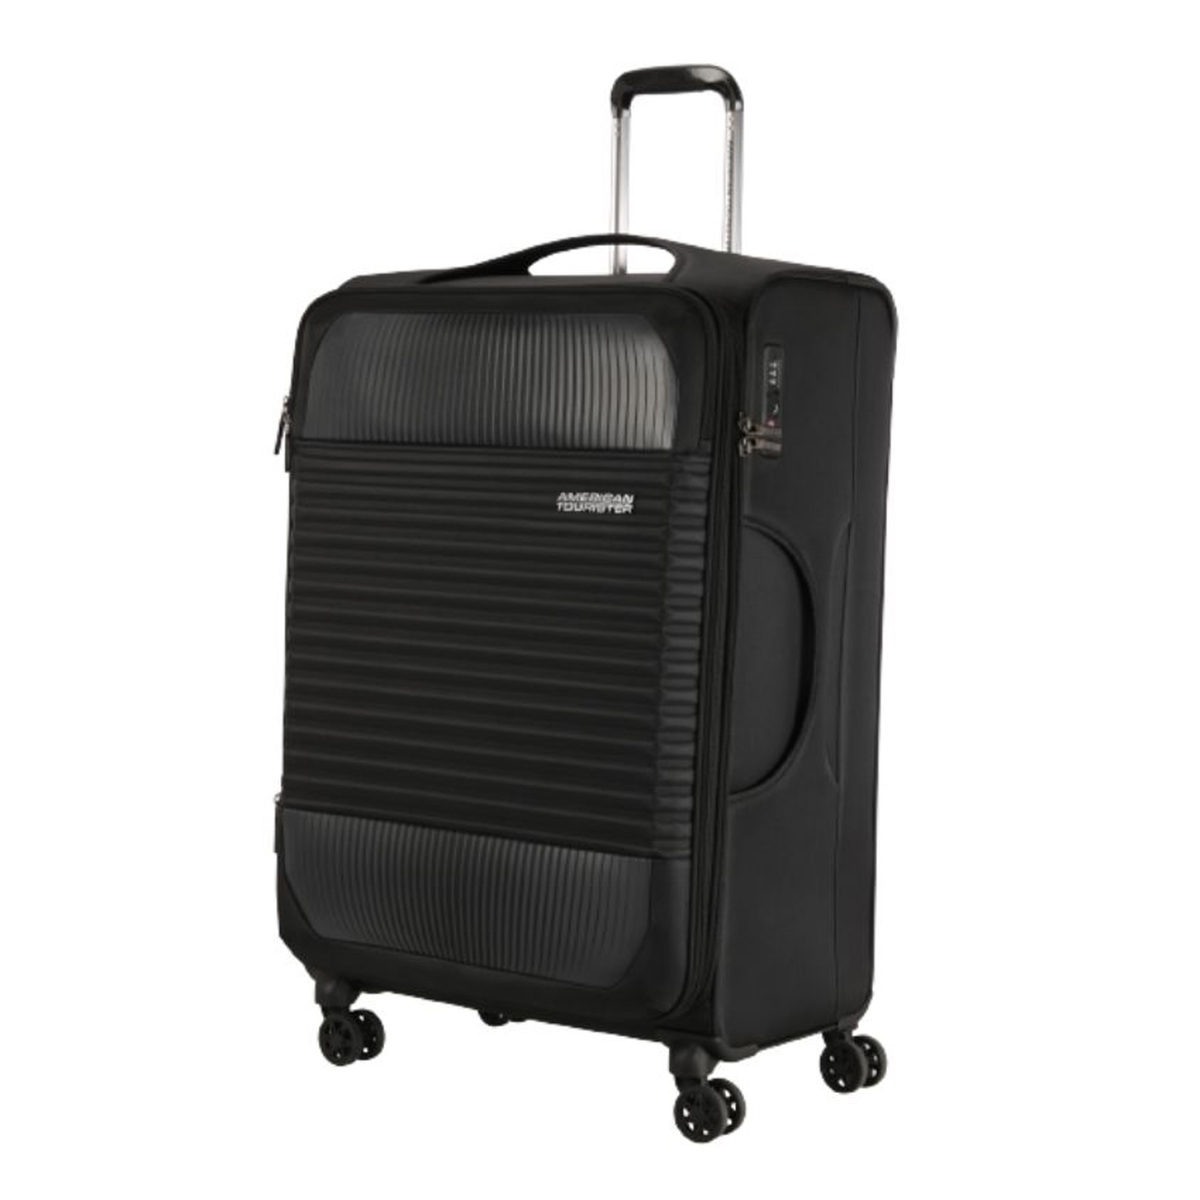 امريكان توريستر حقيبة سفر بعجلات مرنة فورناكس سبينر مع قفل TSA، 55 سم، أسود داكن